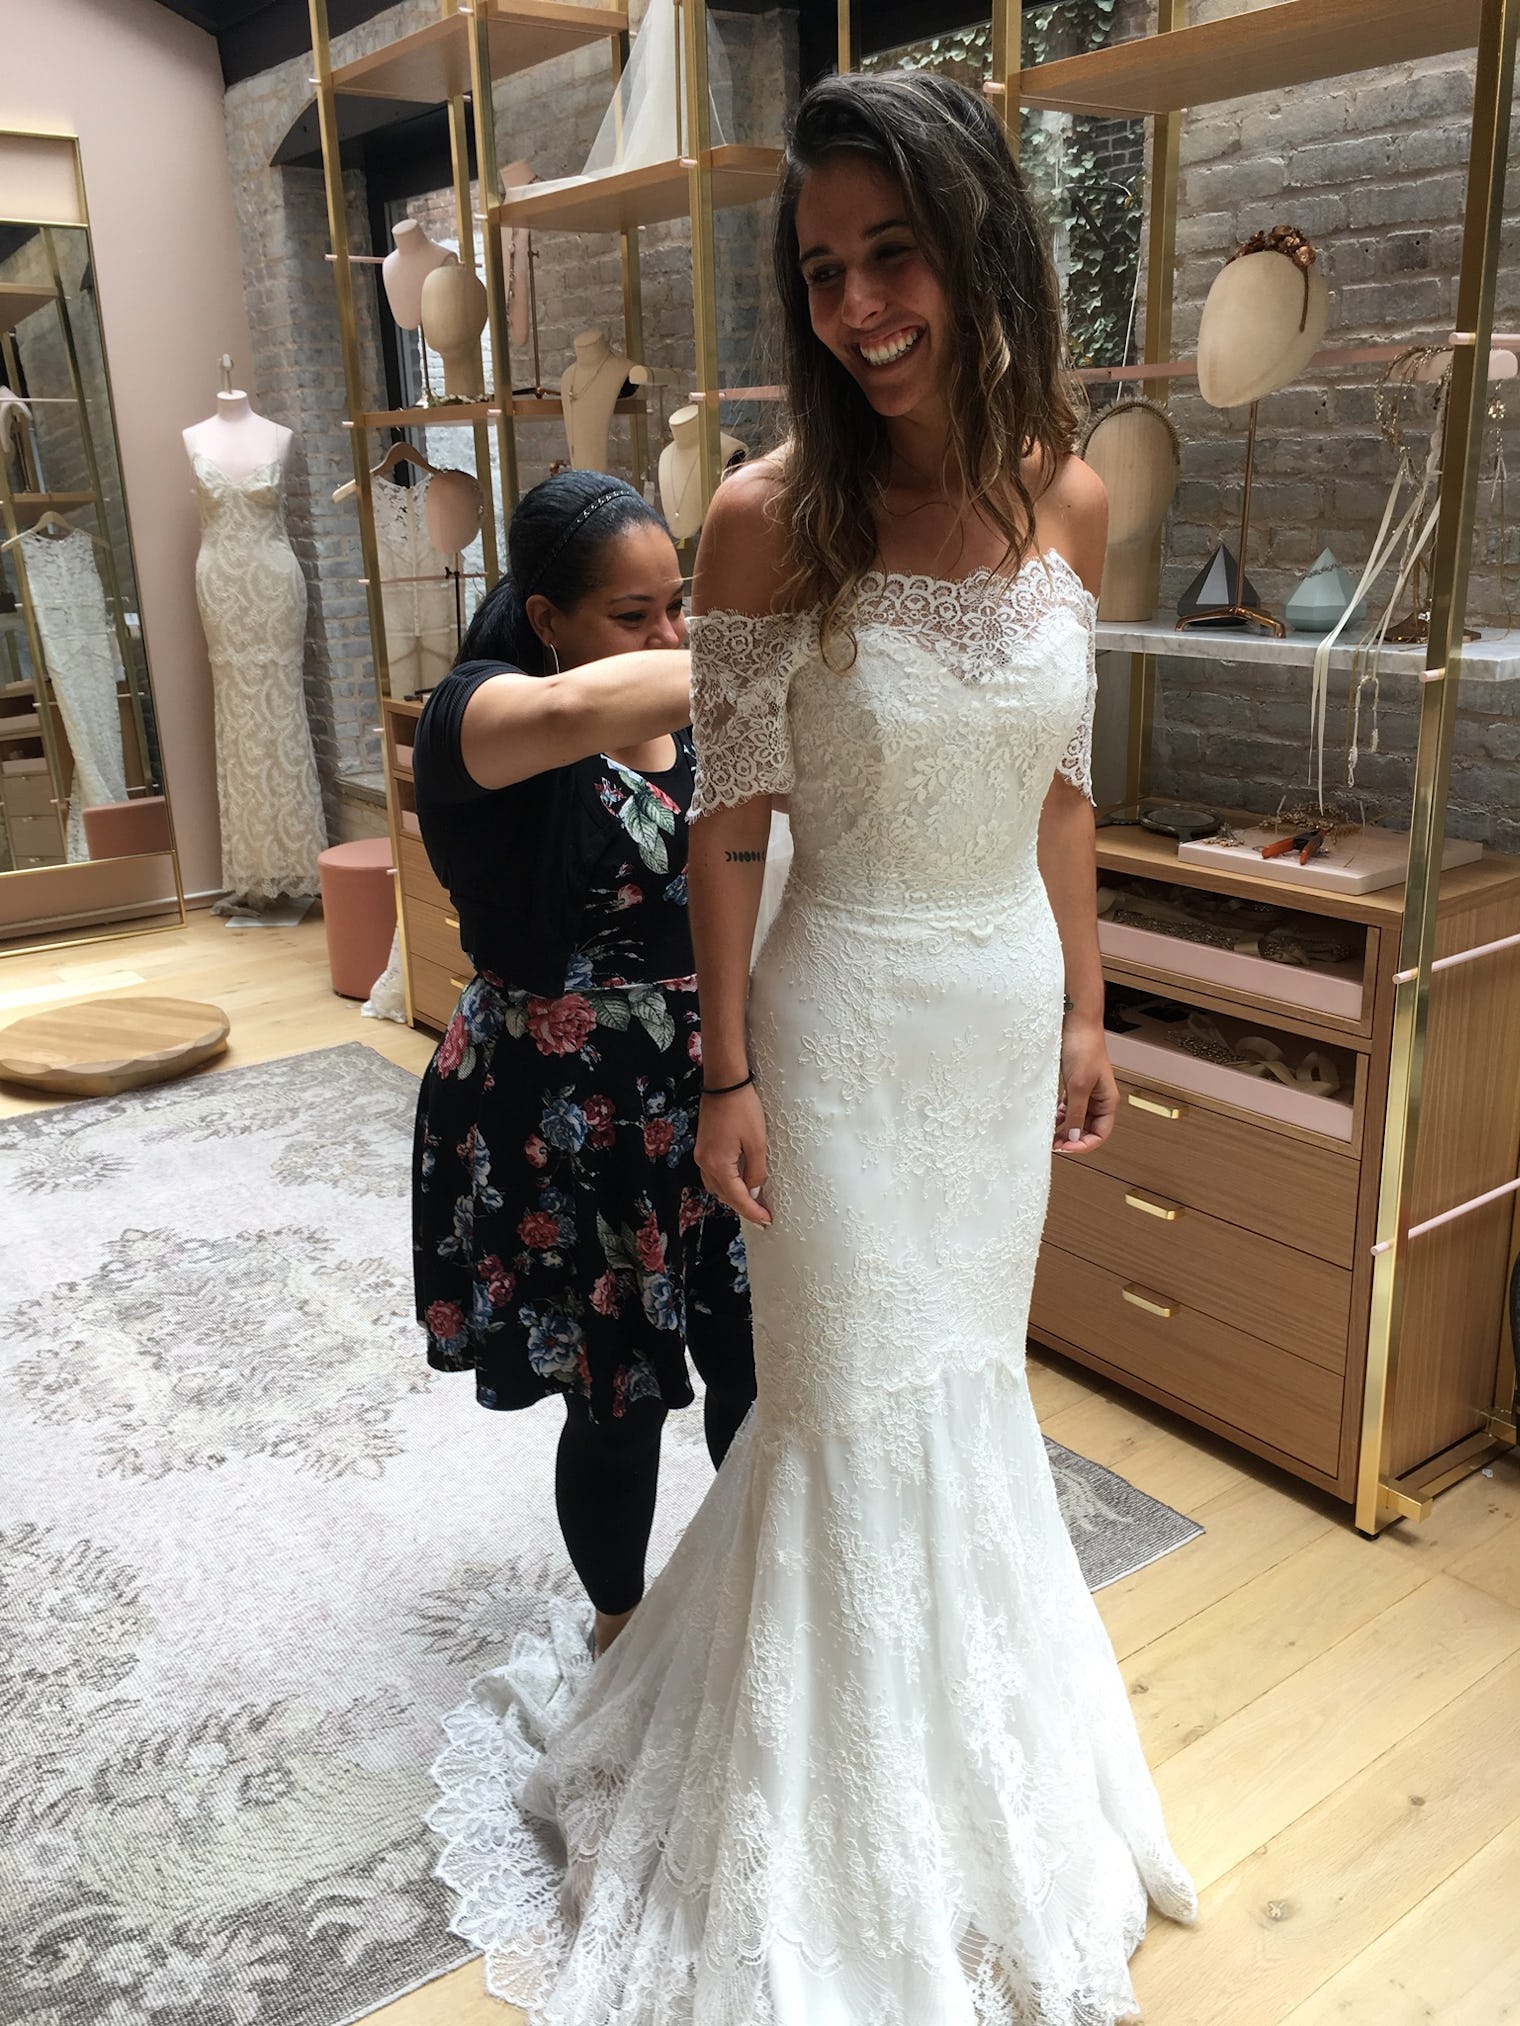 Online Bridal Boutique Floravere Lets You Try On Wedding Dresses ...